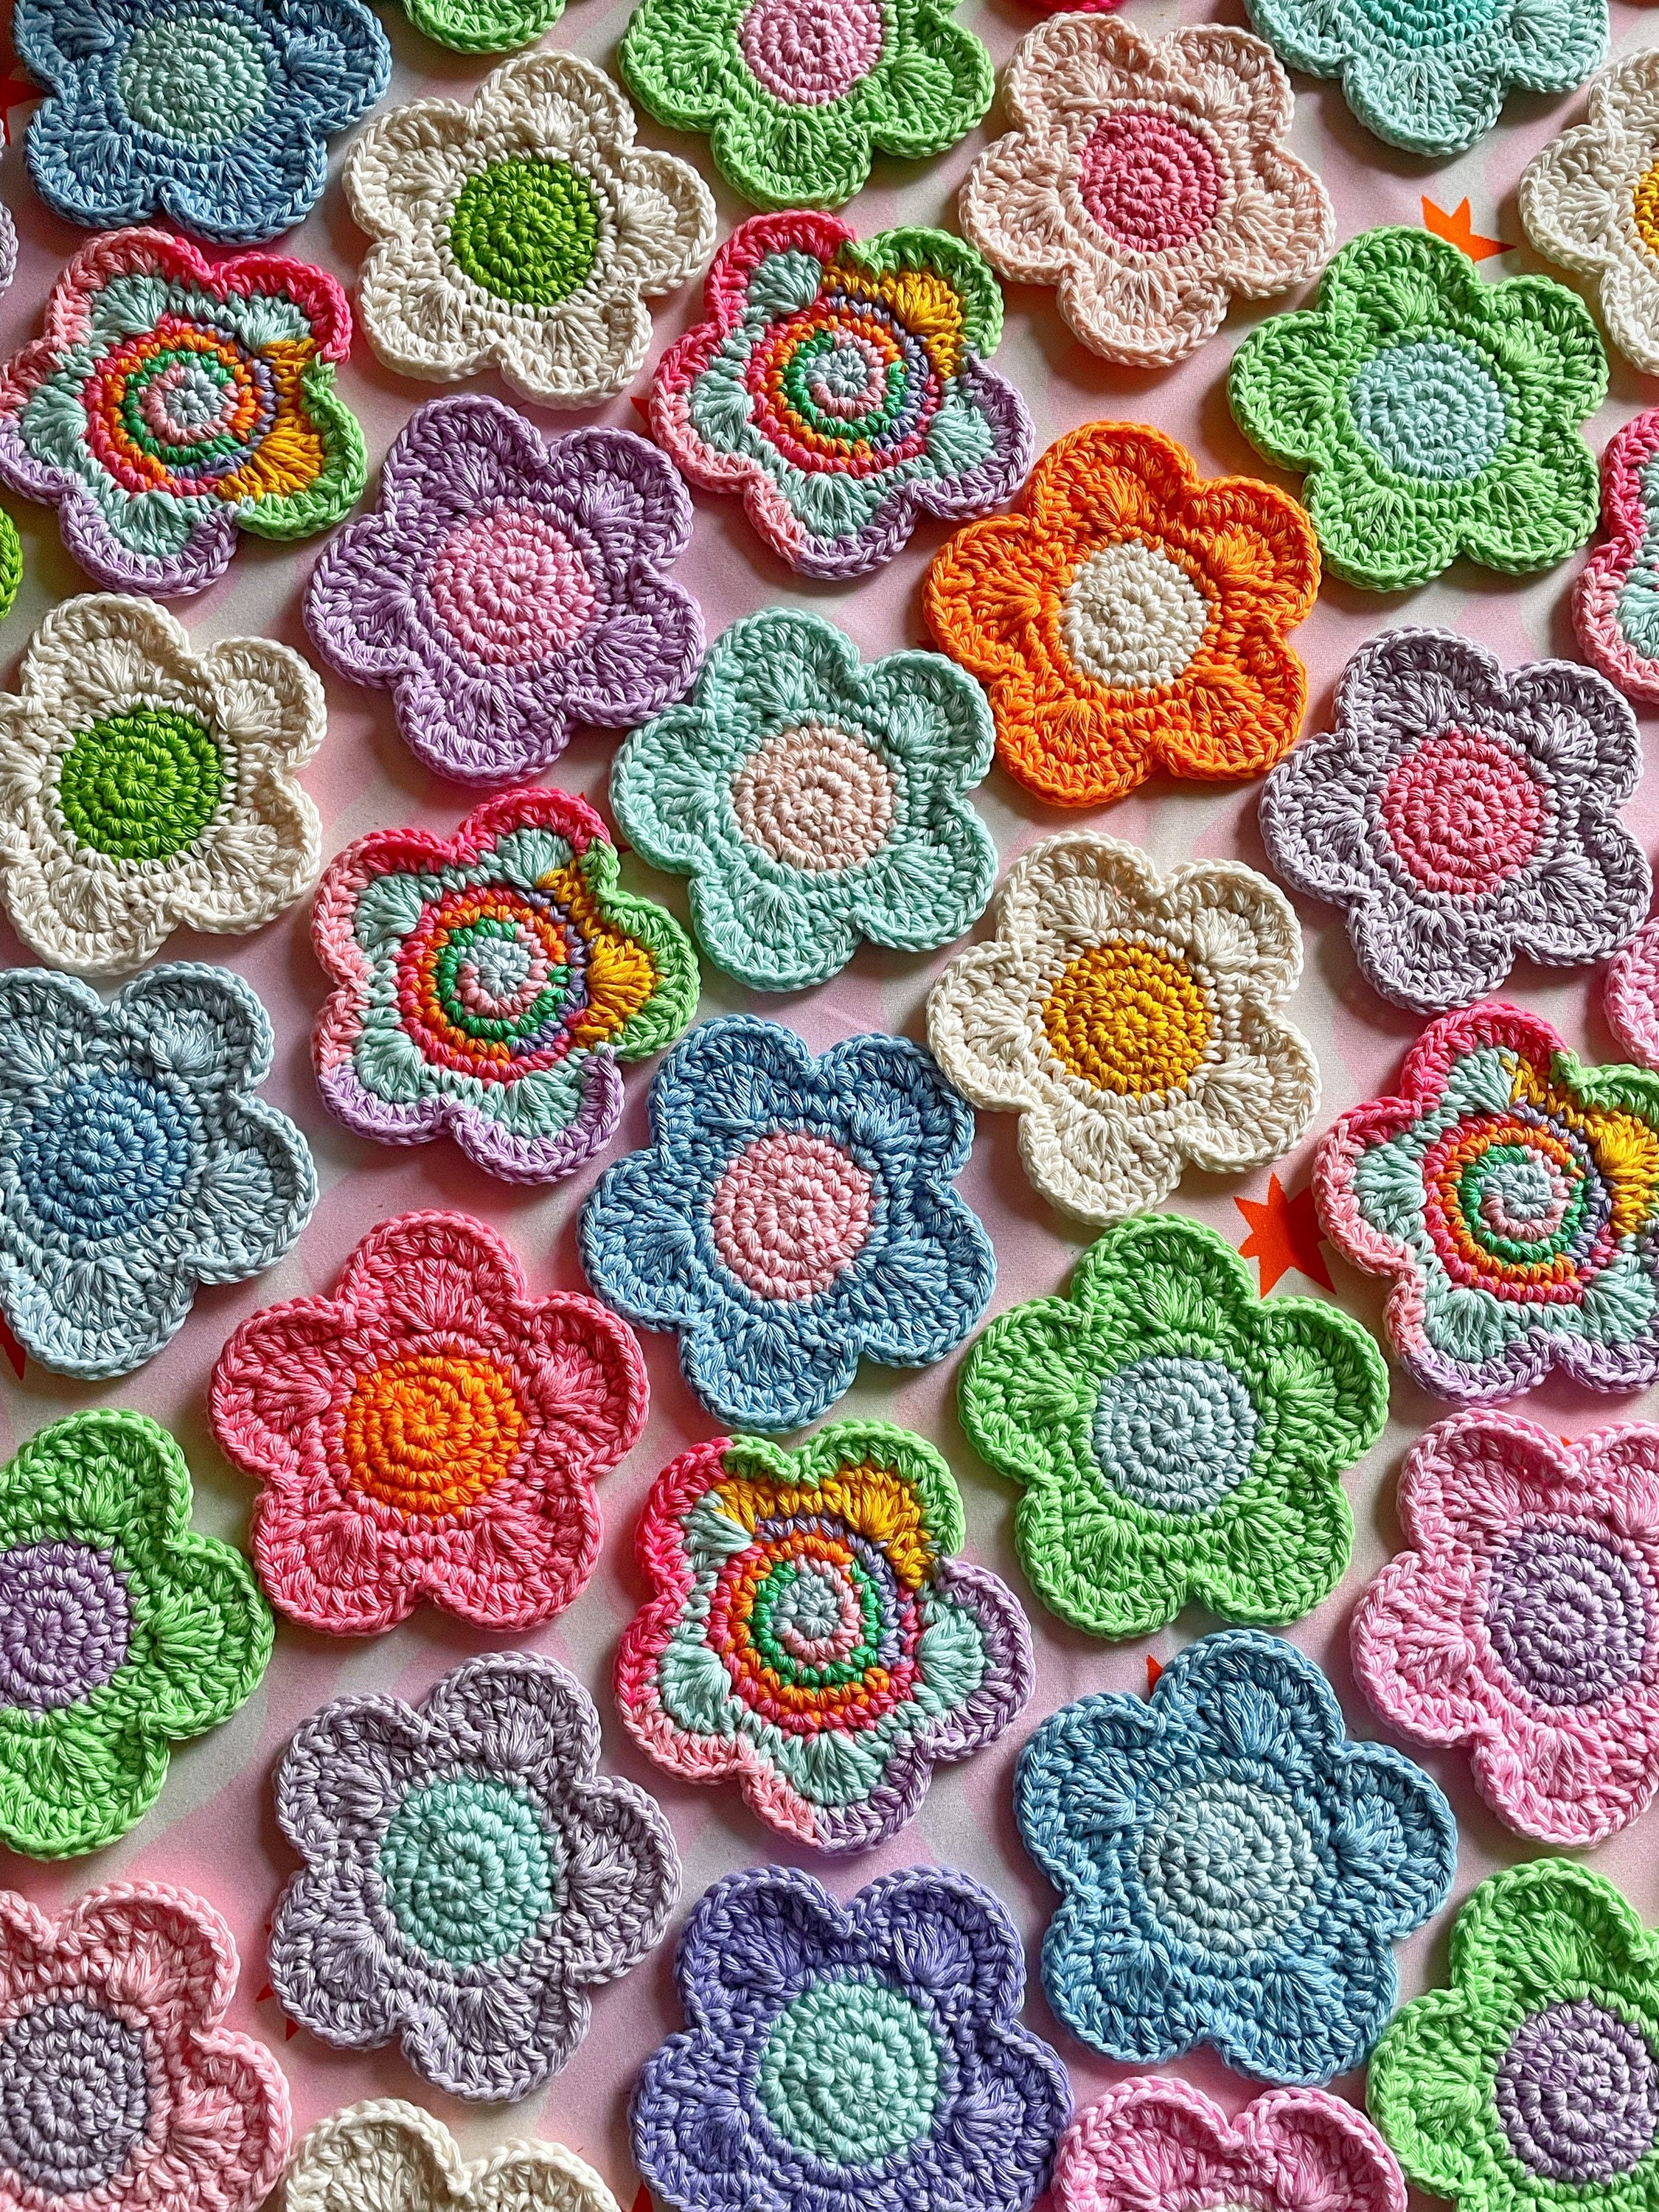 Crochet Coaster, Coasters, Y2K Home Decor, Crochet Coasters, 2000s, Y2K,  Crochet Flower, Flower Coasters, Danish Pastel, Dopamine Decor 